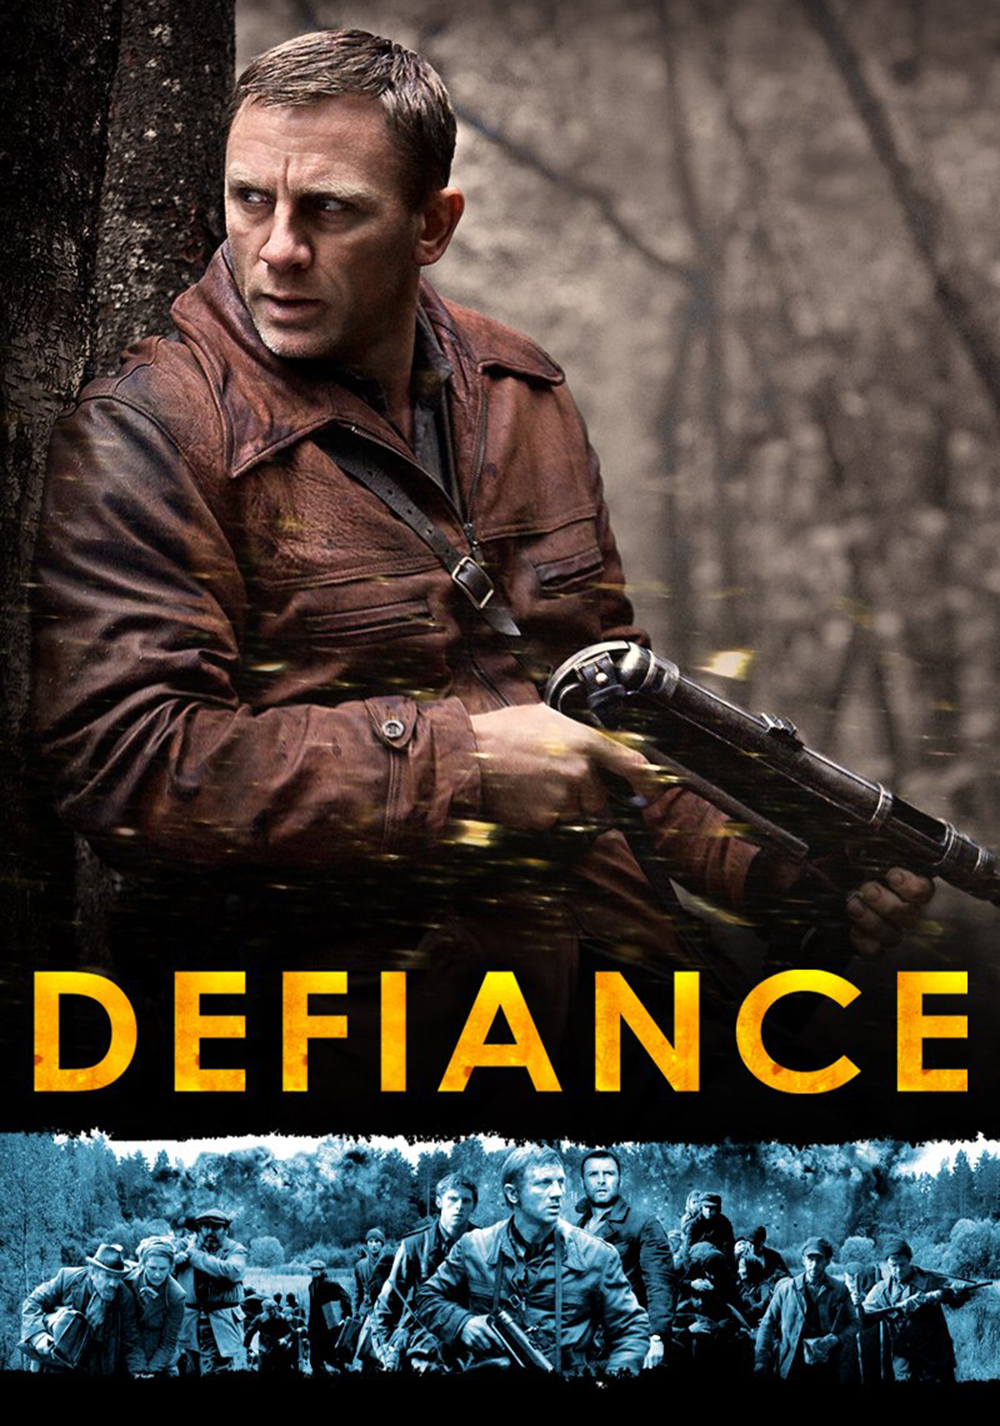 Defiance movie true story